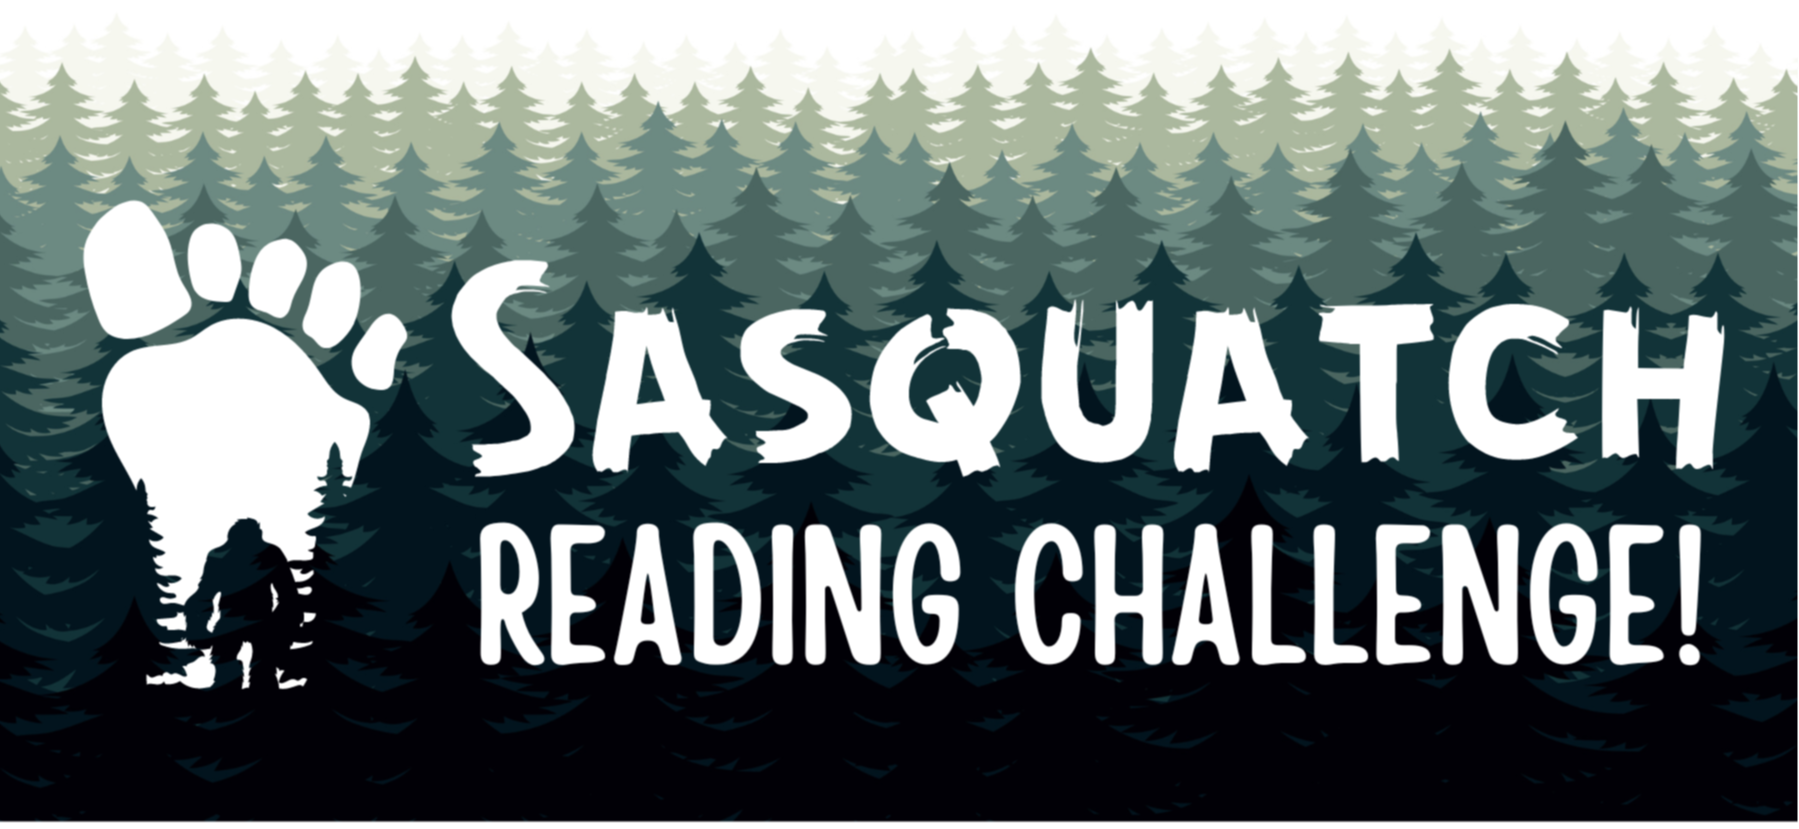 Sasquatch Reading Challenge, Trees, Sasquatch, Sasquatch footprint